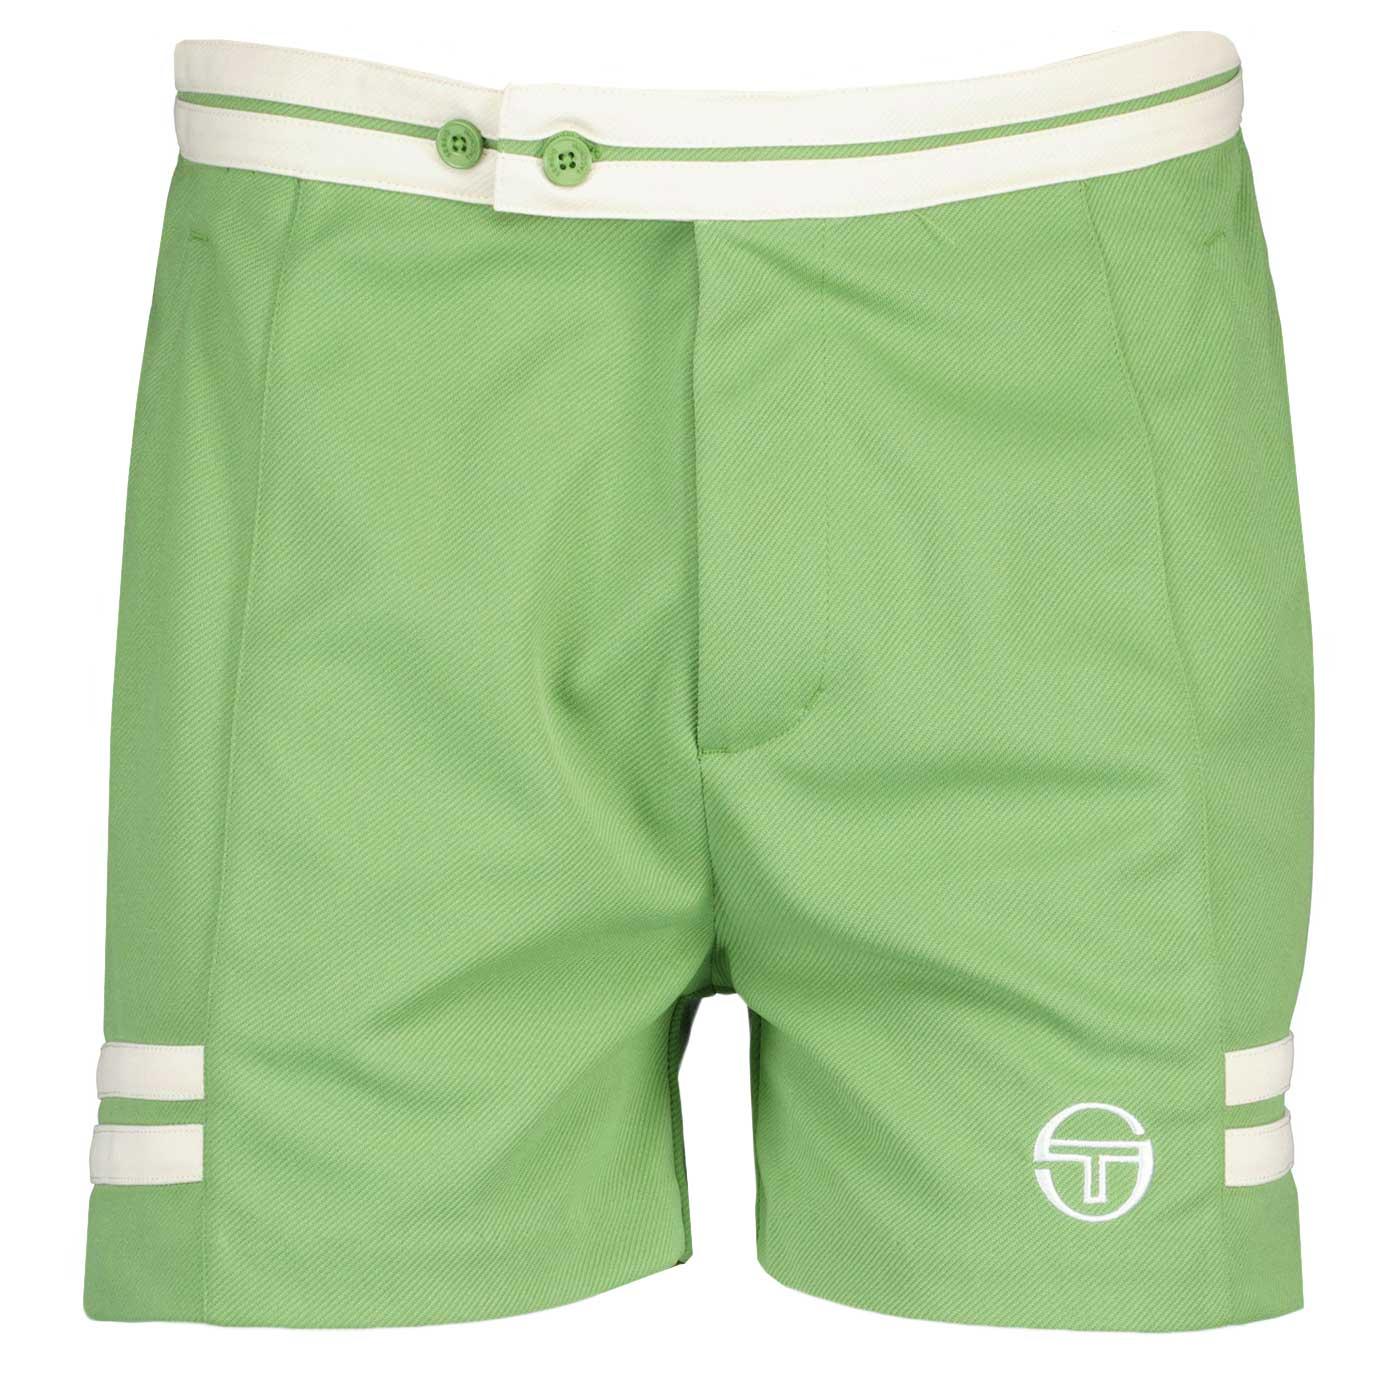 Supermac Sergio Tacchini Retro Tennis Shorts Green